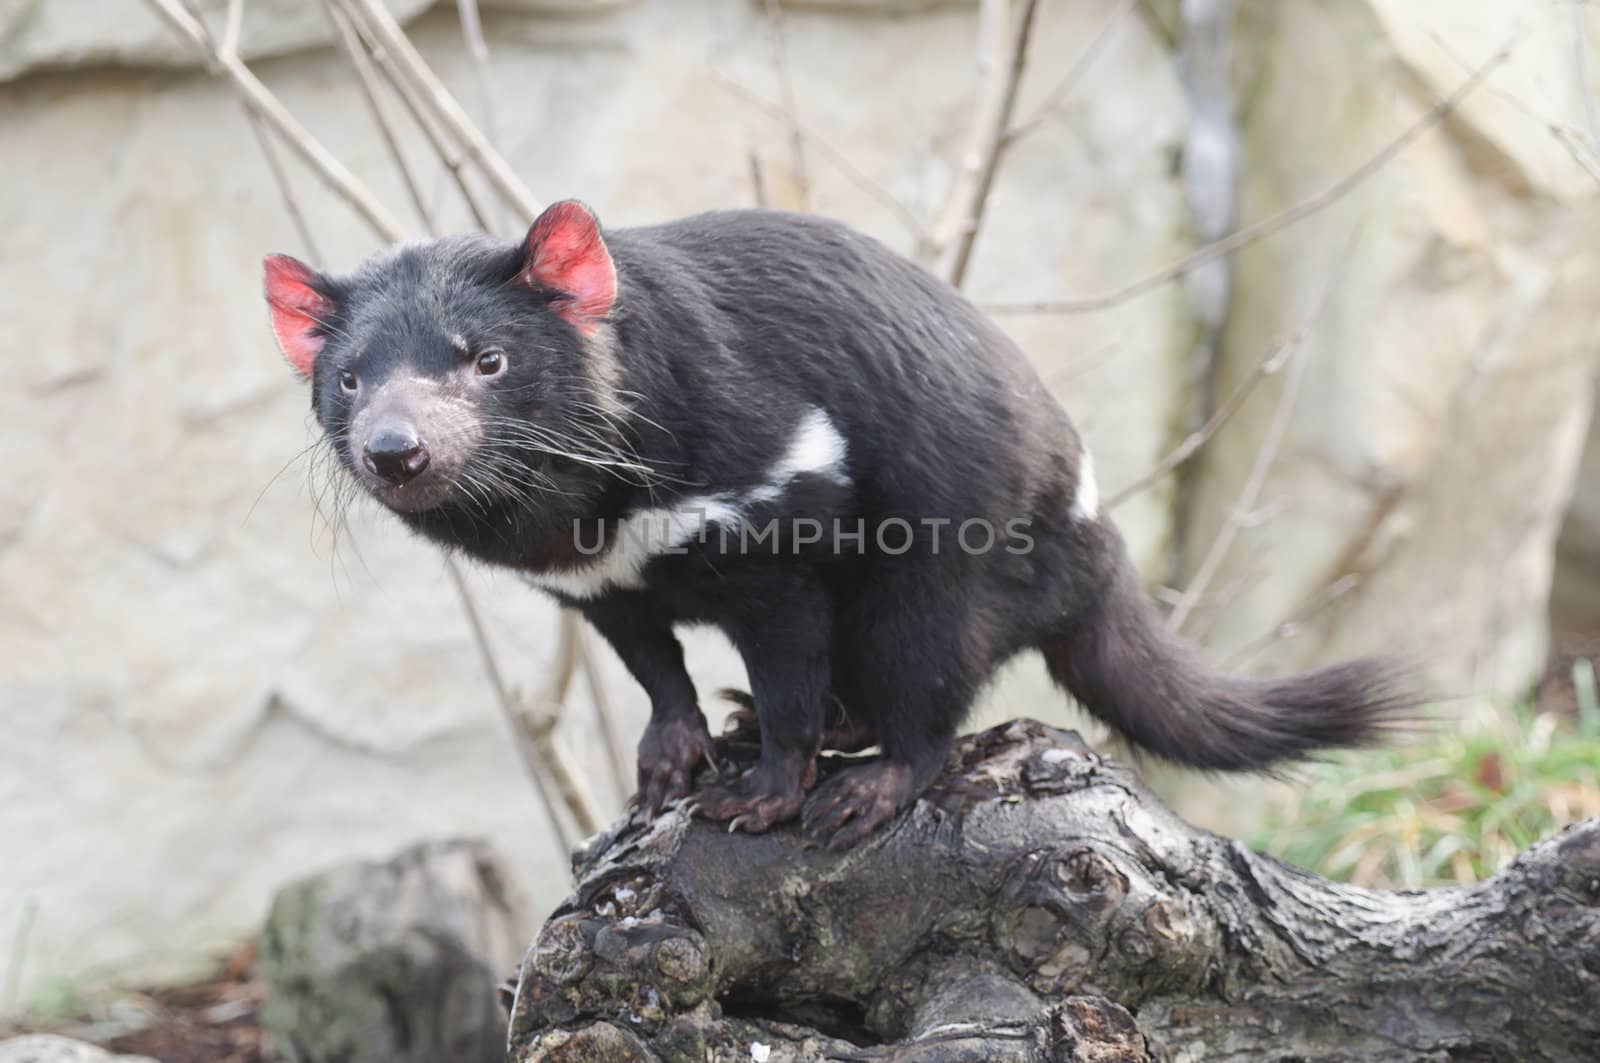 Rare Tasmanian devil (Sarcophilus harrisii), carnivorous marsupial of the family Dasyuridae now found in the wild only in the Australian island state of Tasmania.